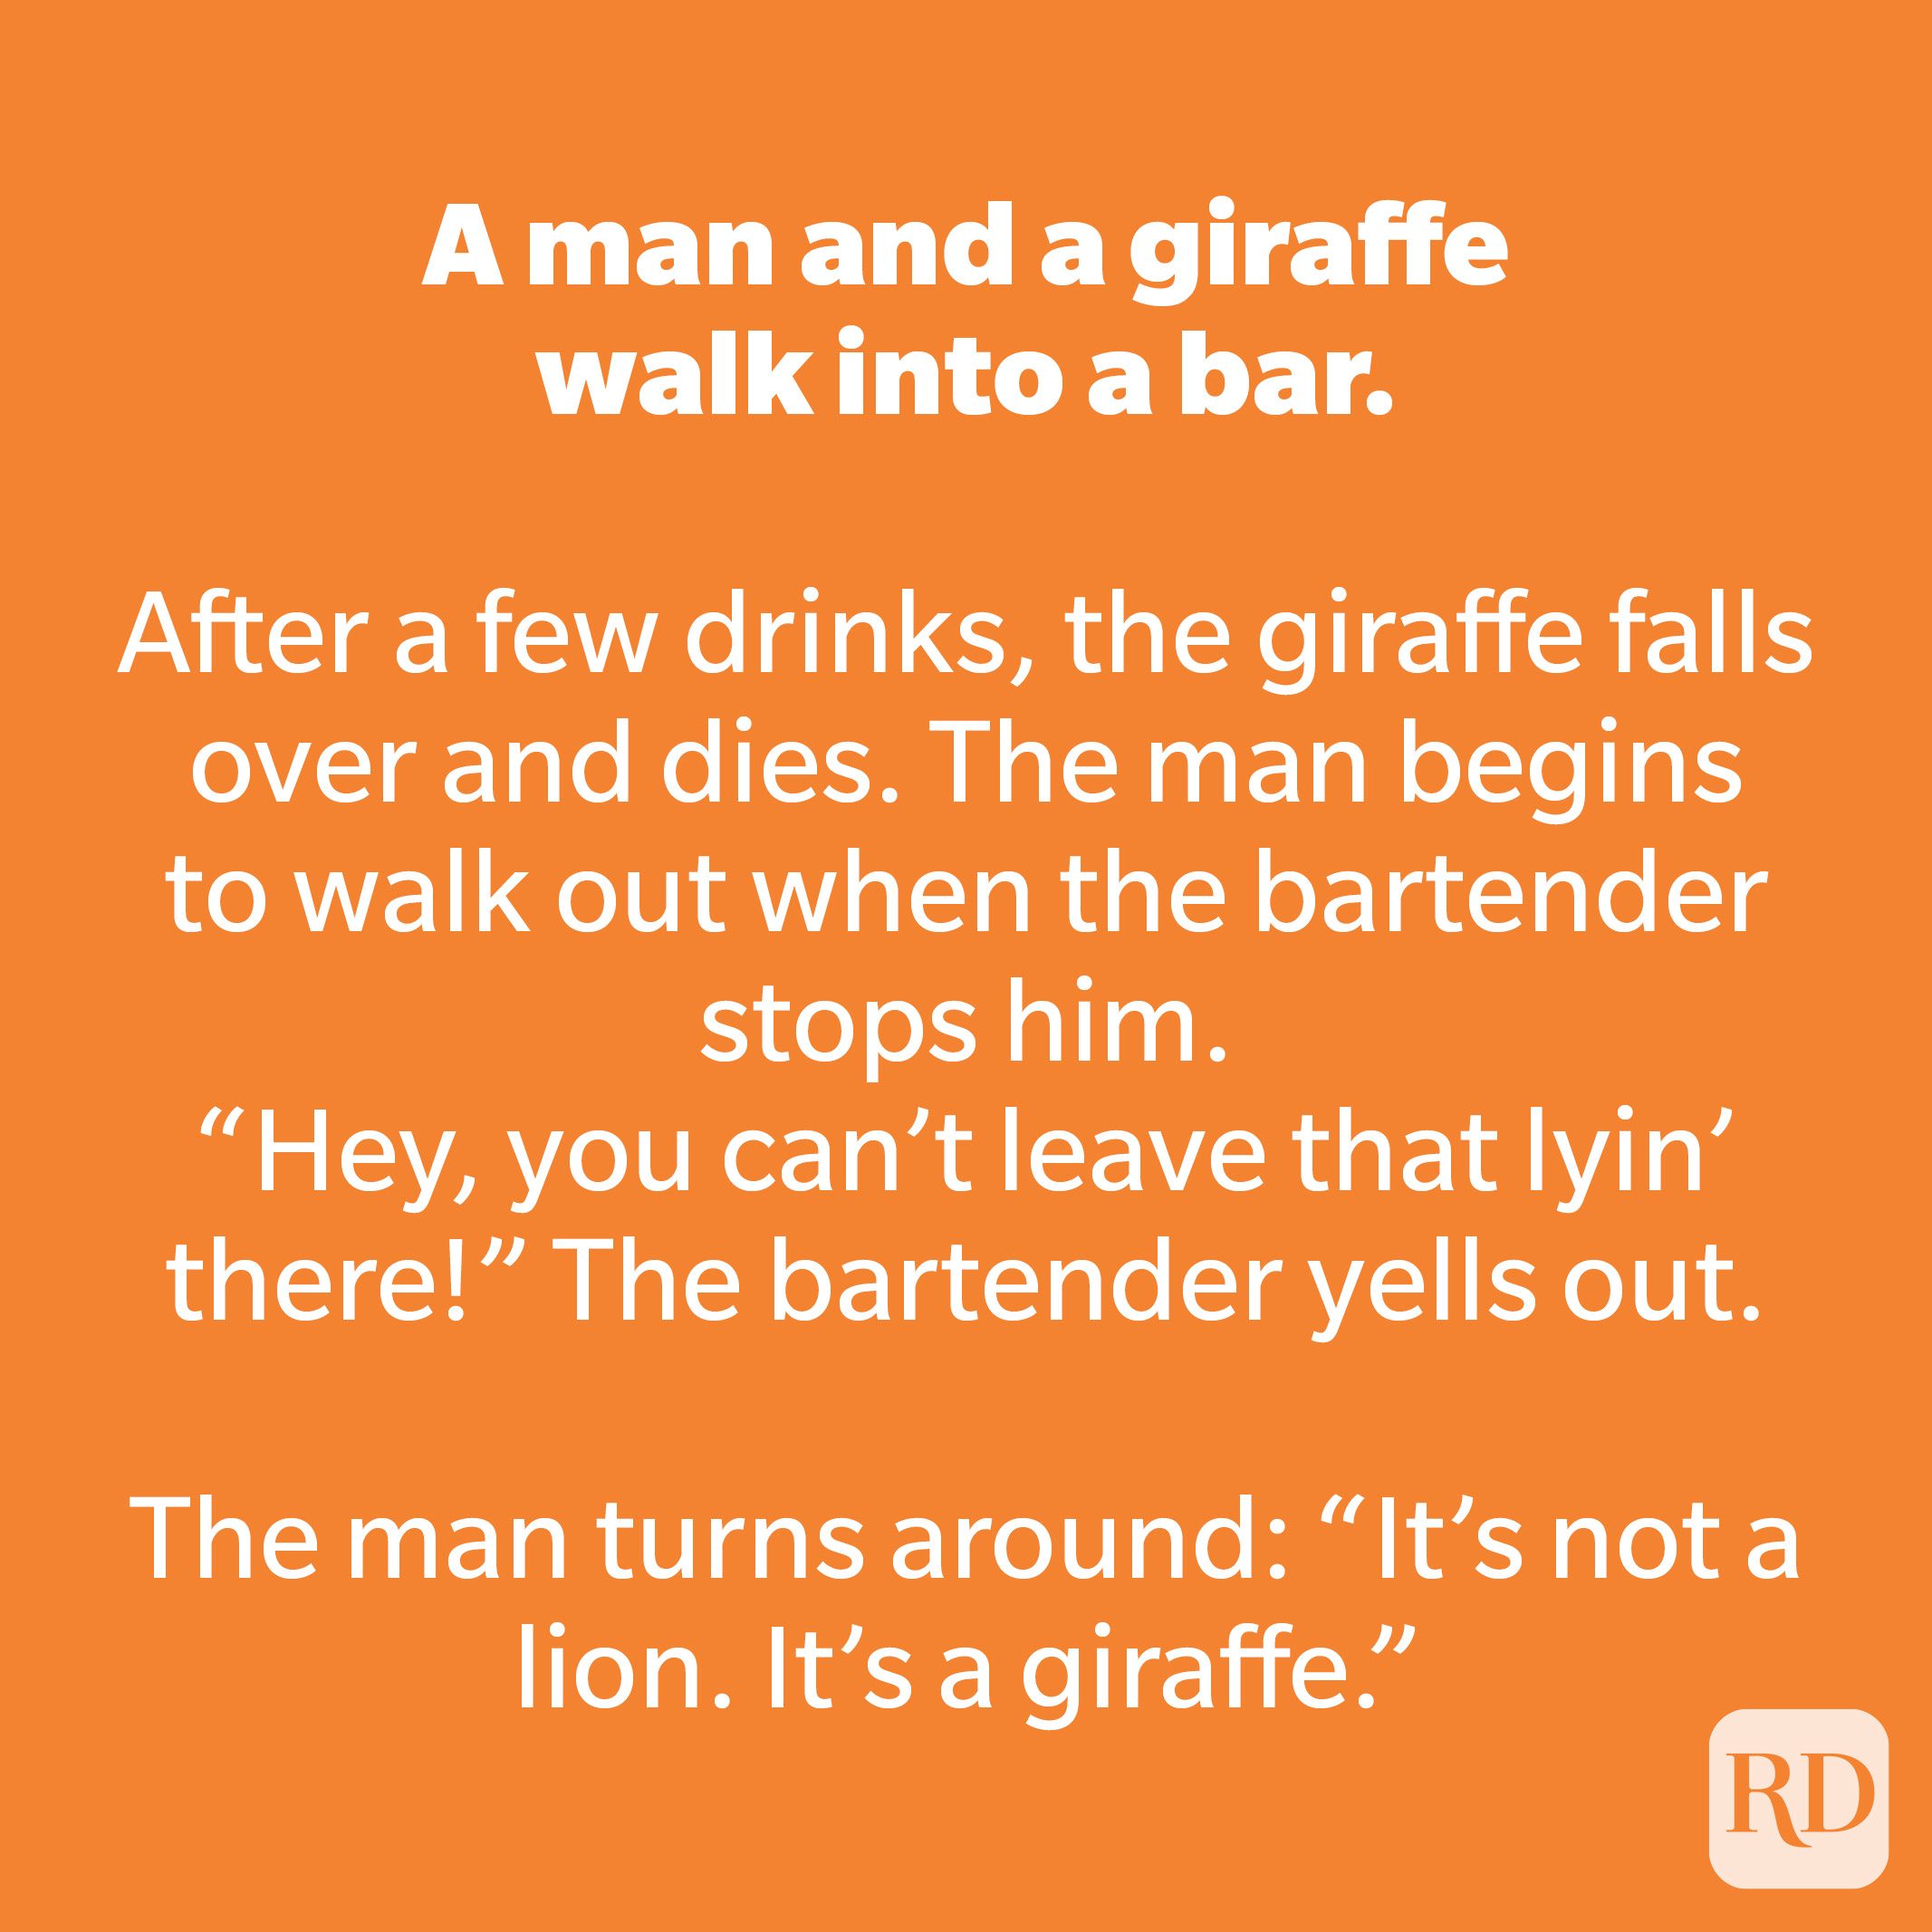 A man and a giraffe walk into a bar.